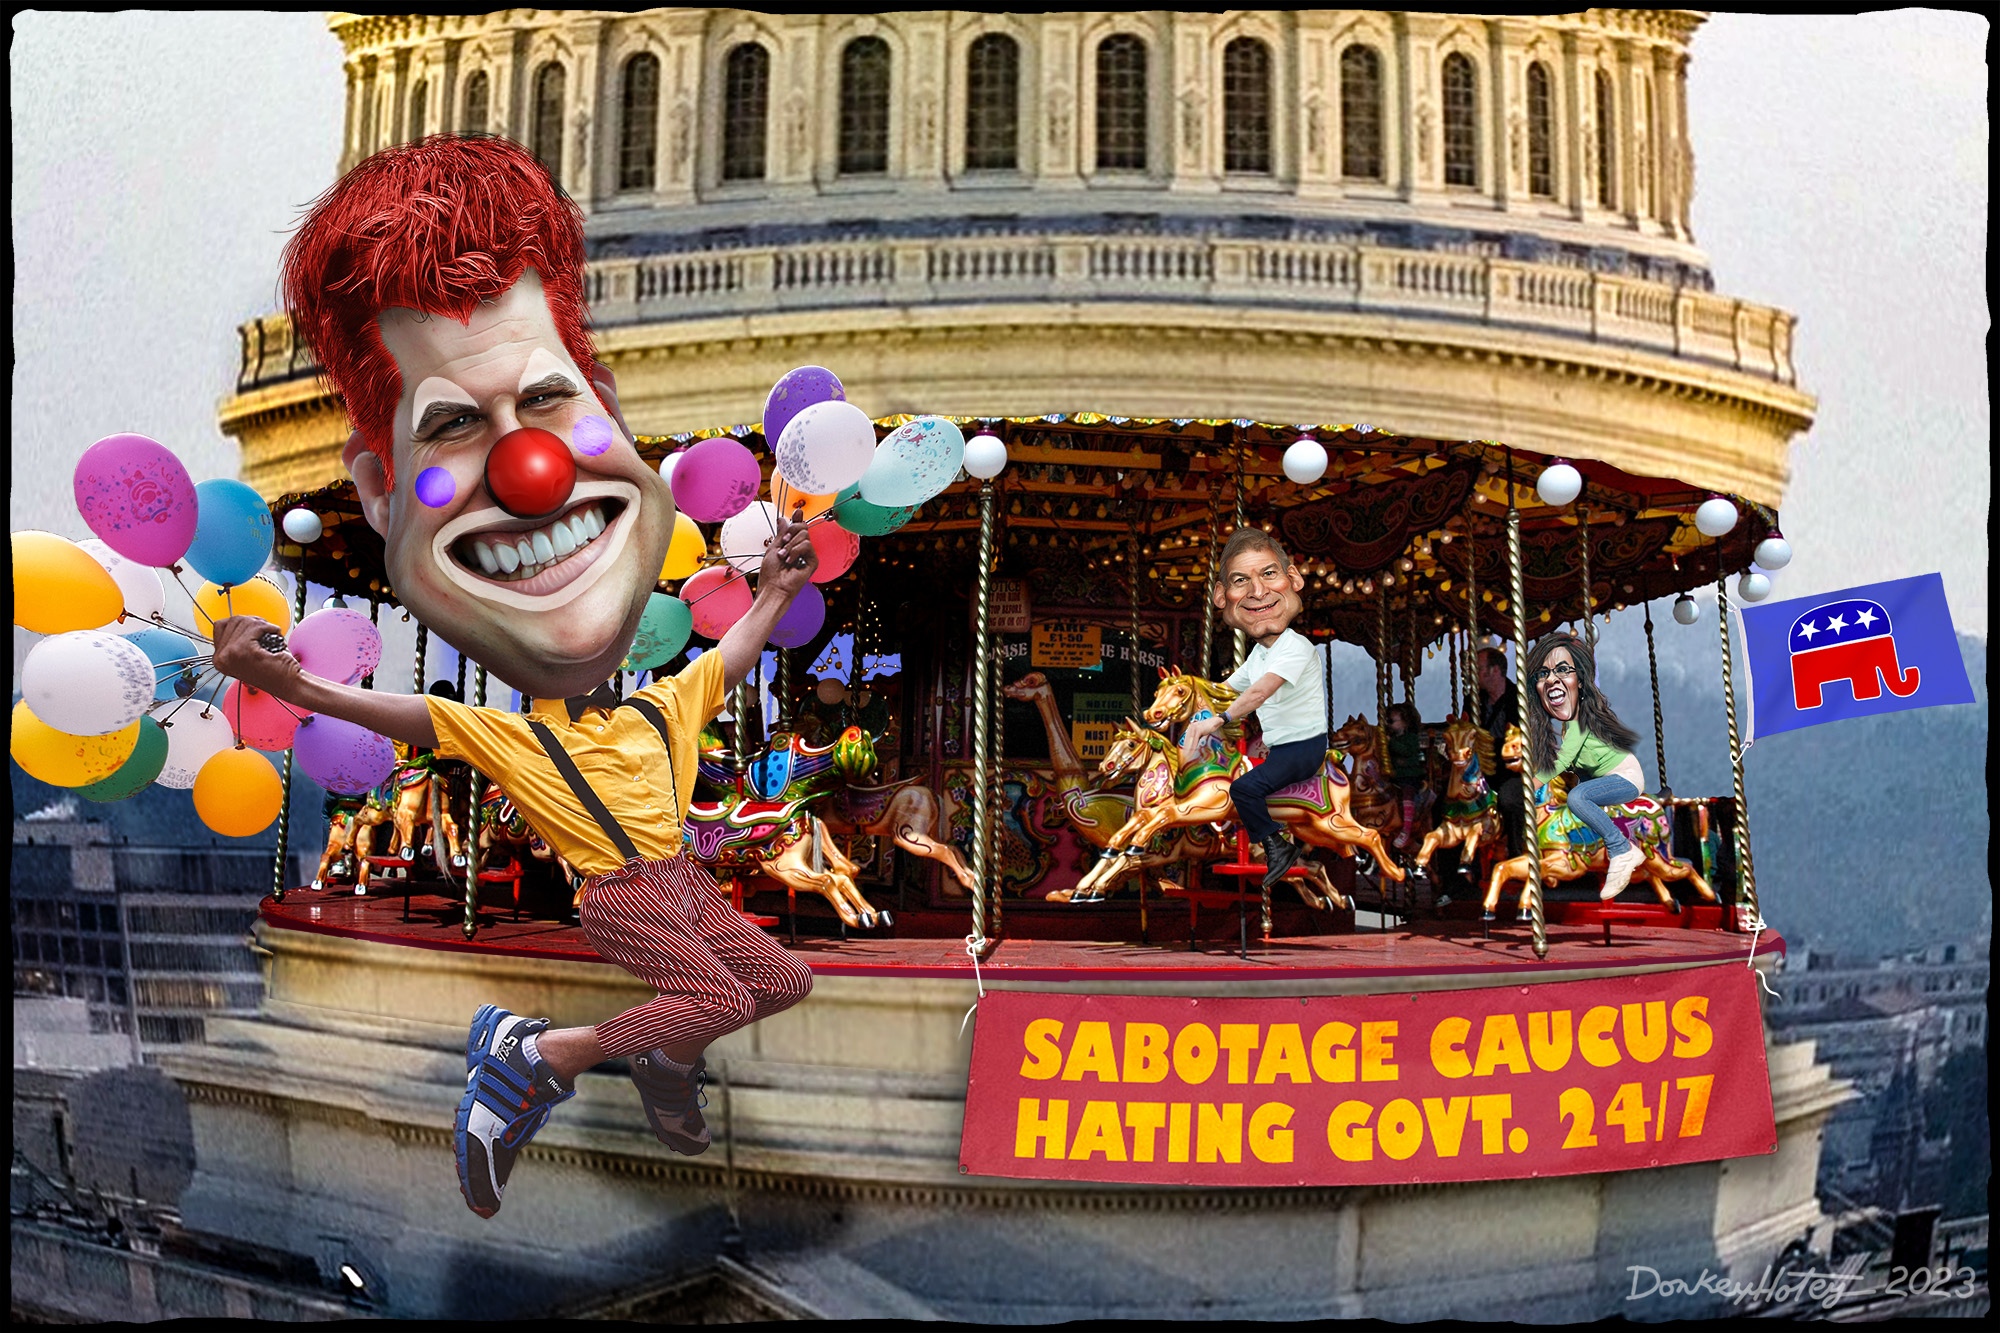 You elect clowns, you get a circus